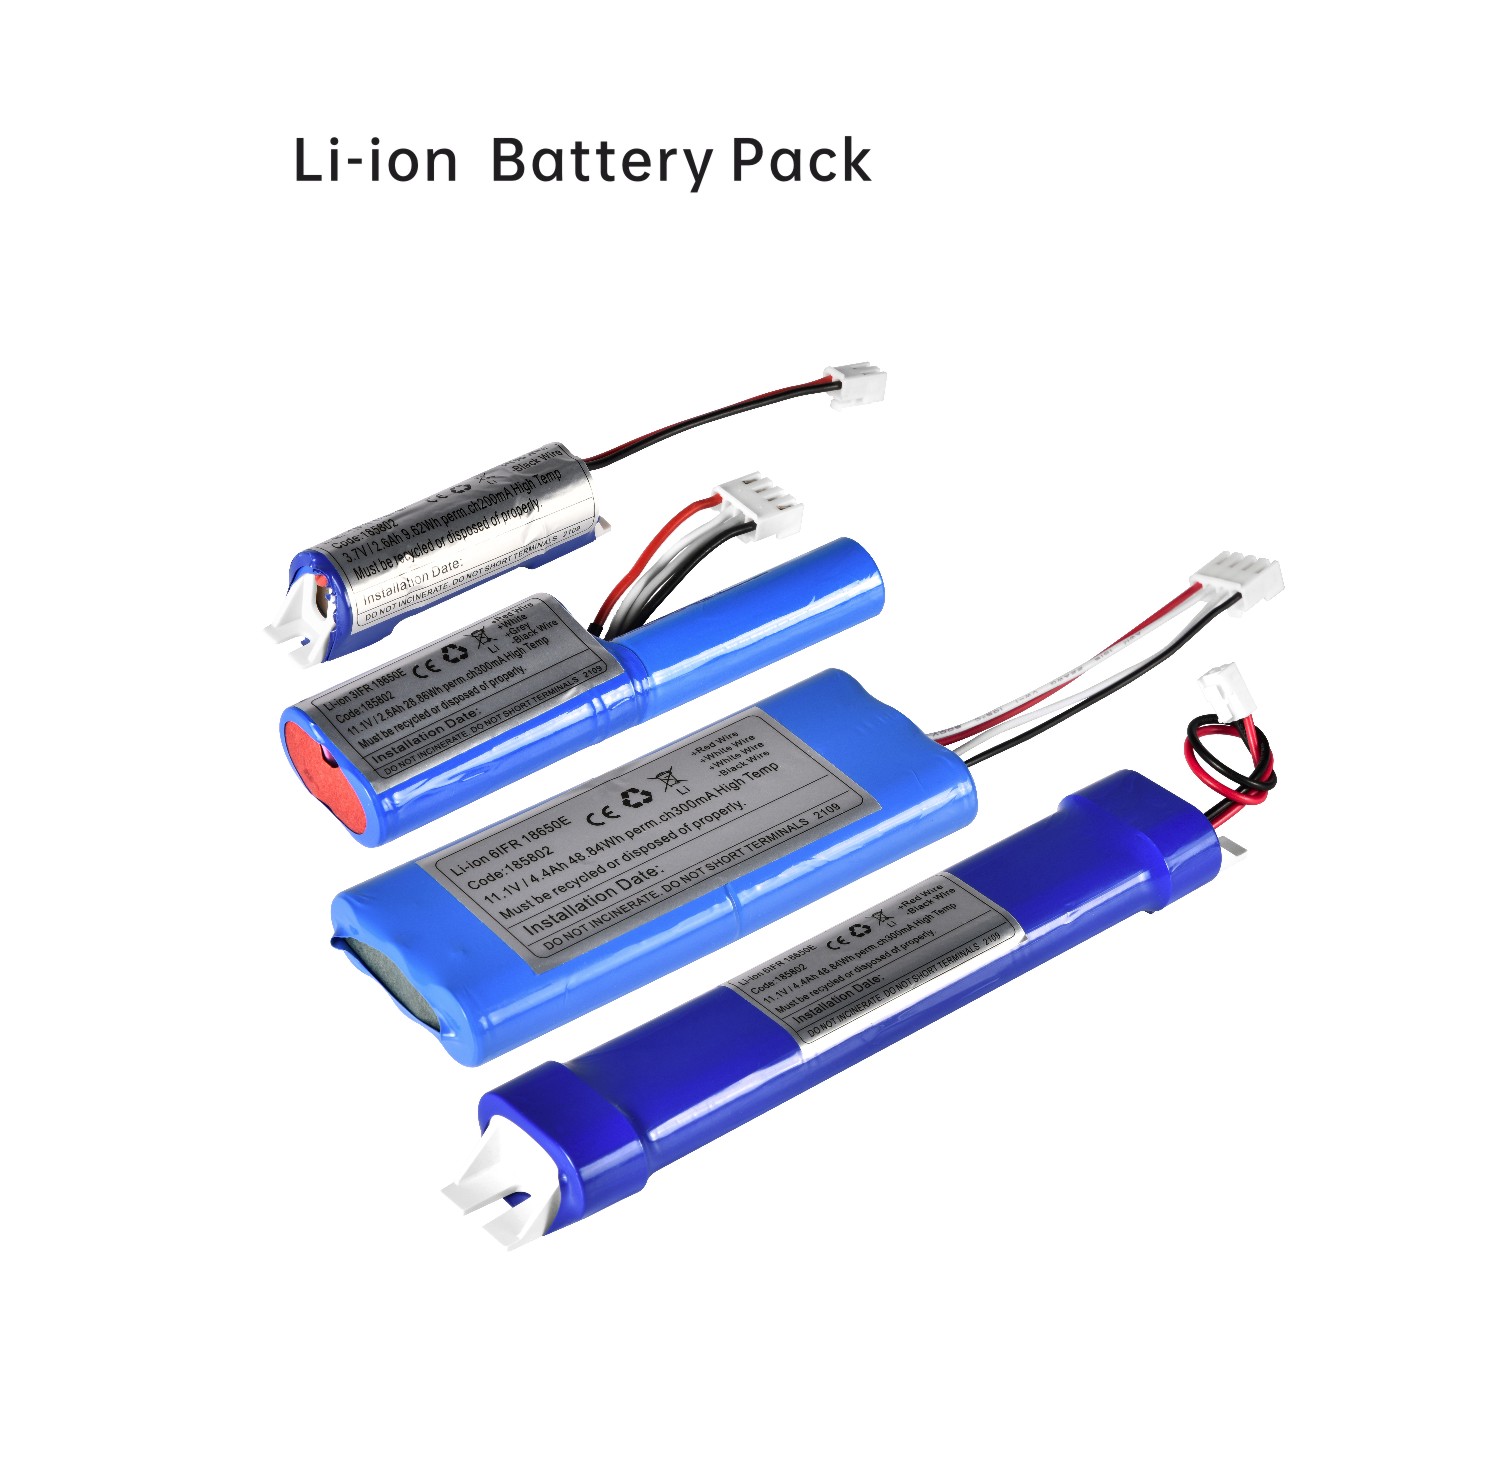 Upgrade LifePO4 Battery Pack for Emergency Lighting